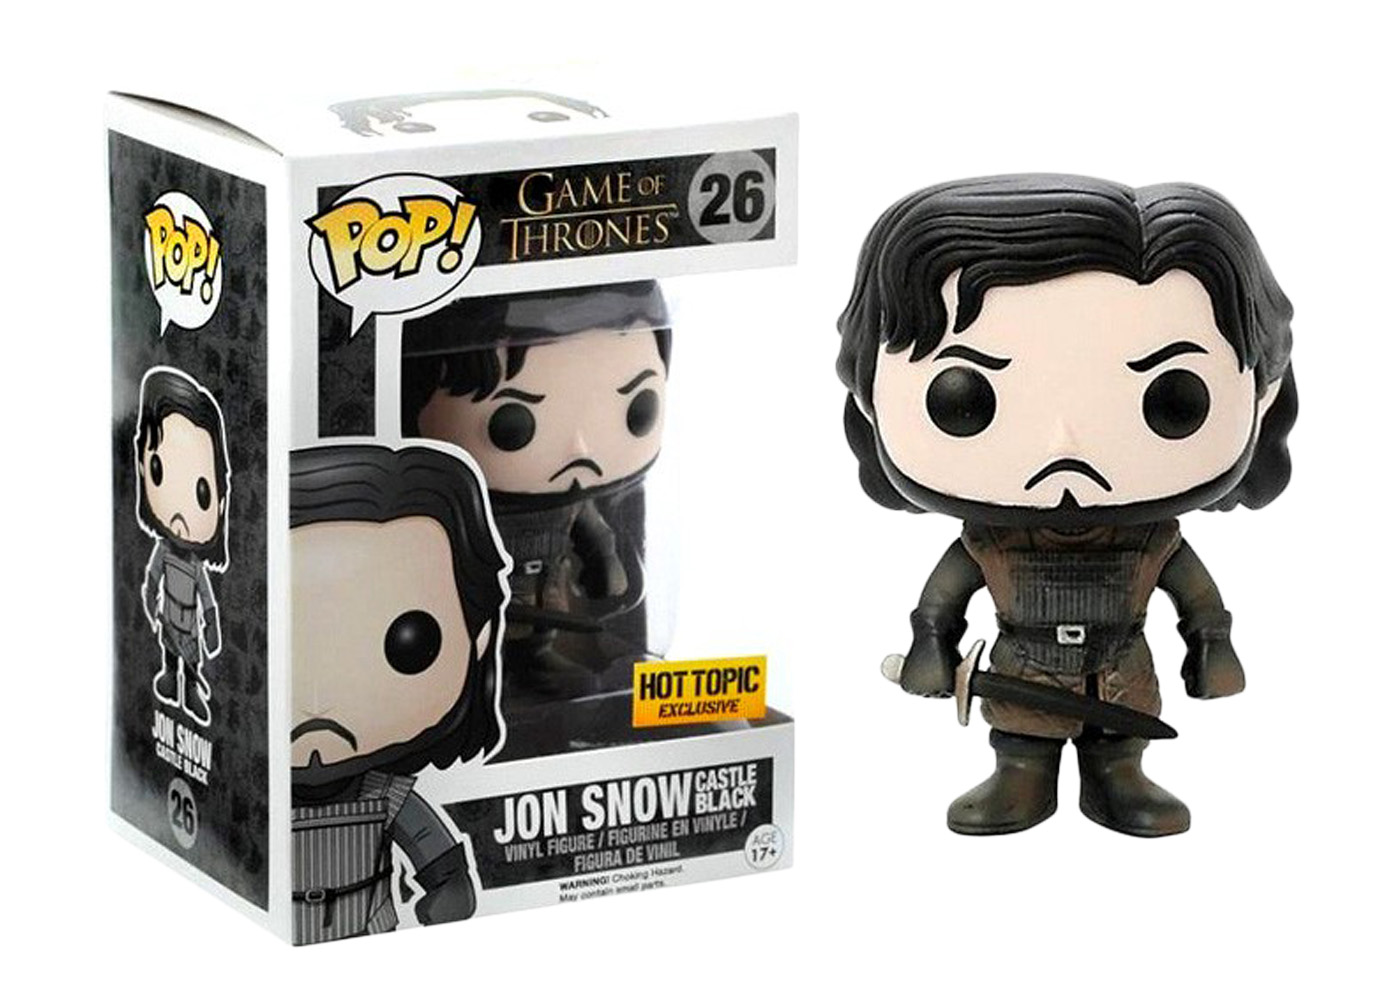 Funko Pop! Game of Thrones Jon Snow Exclusive Castle Black Hot